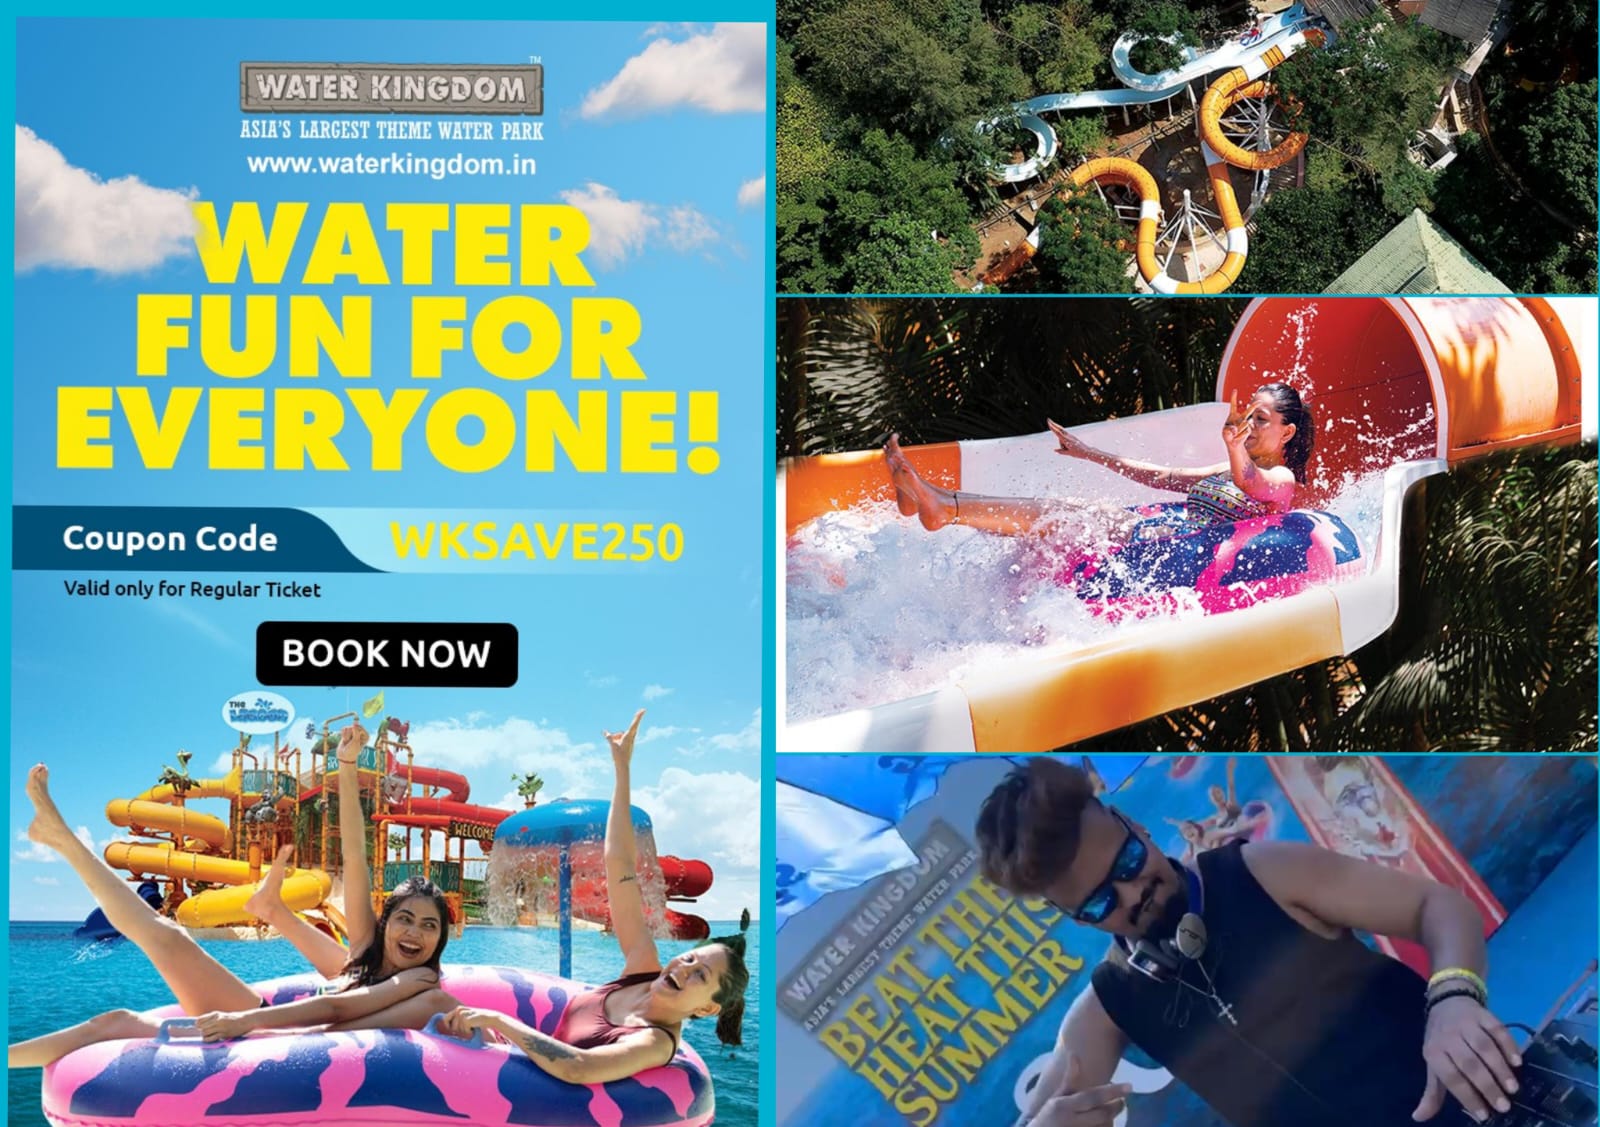 Make a Splash This Summer: Unbeatable Deals Await at “Water Kingdom”, Largest Theme Water Park!”